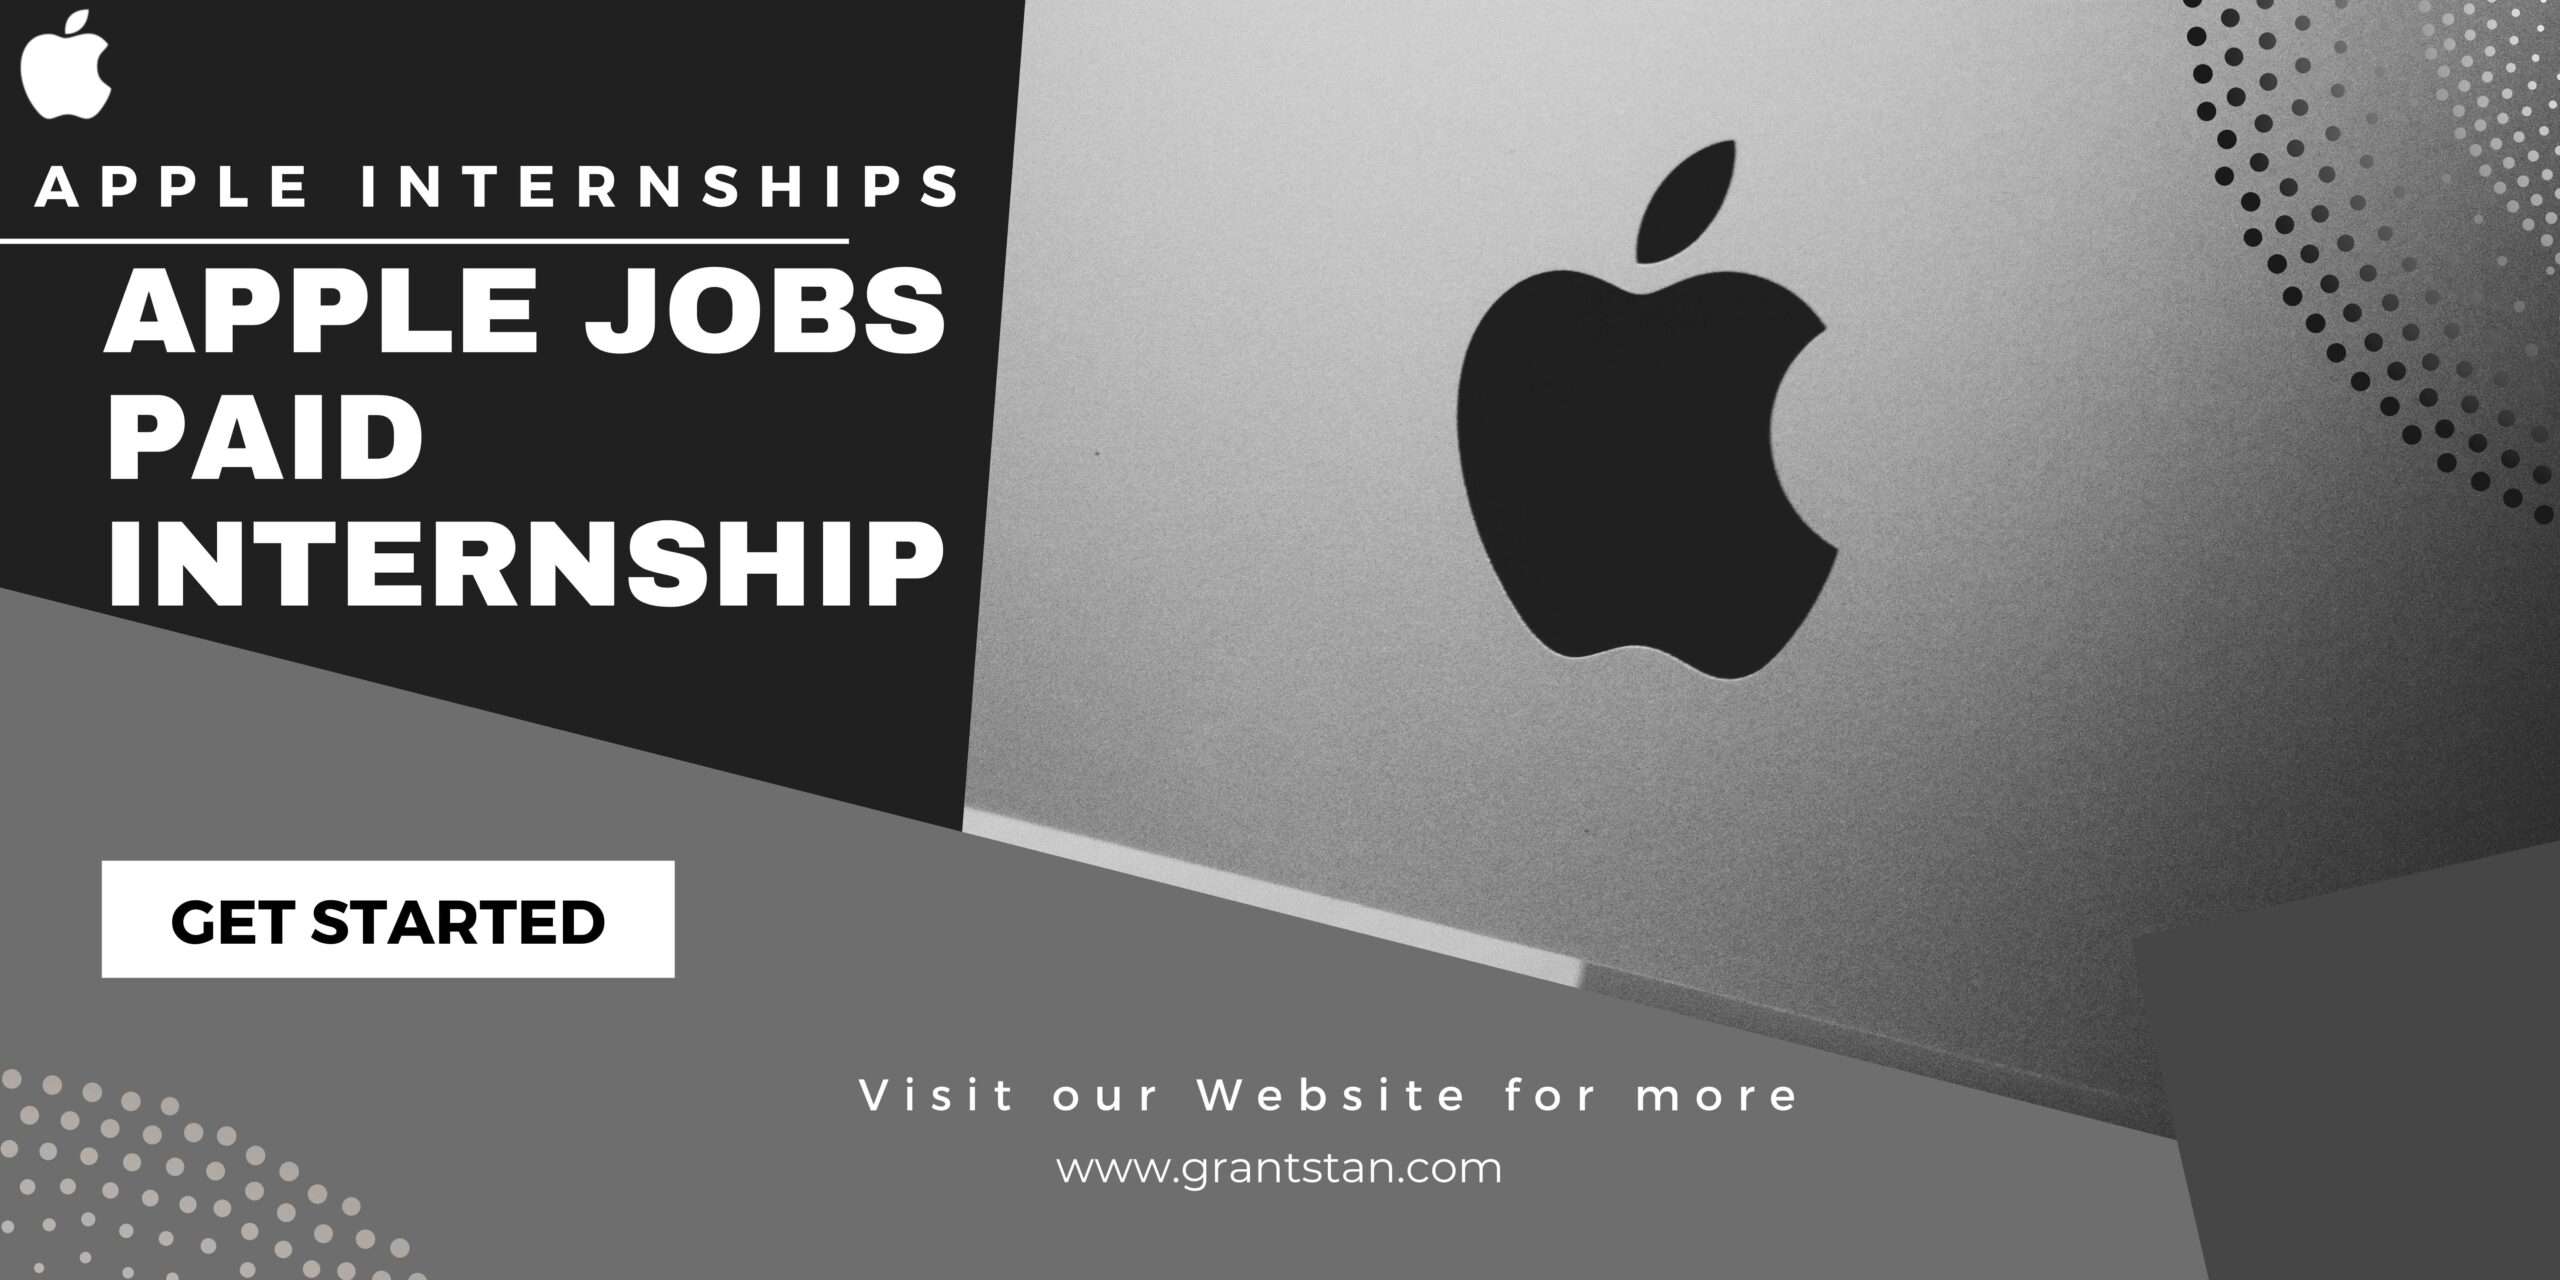 Apple Internships Apple Jobs GrantStan